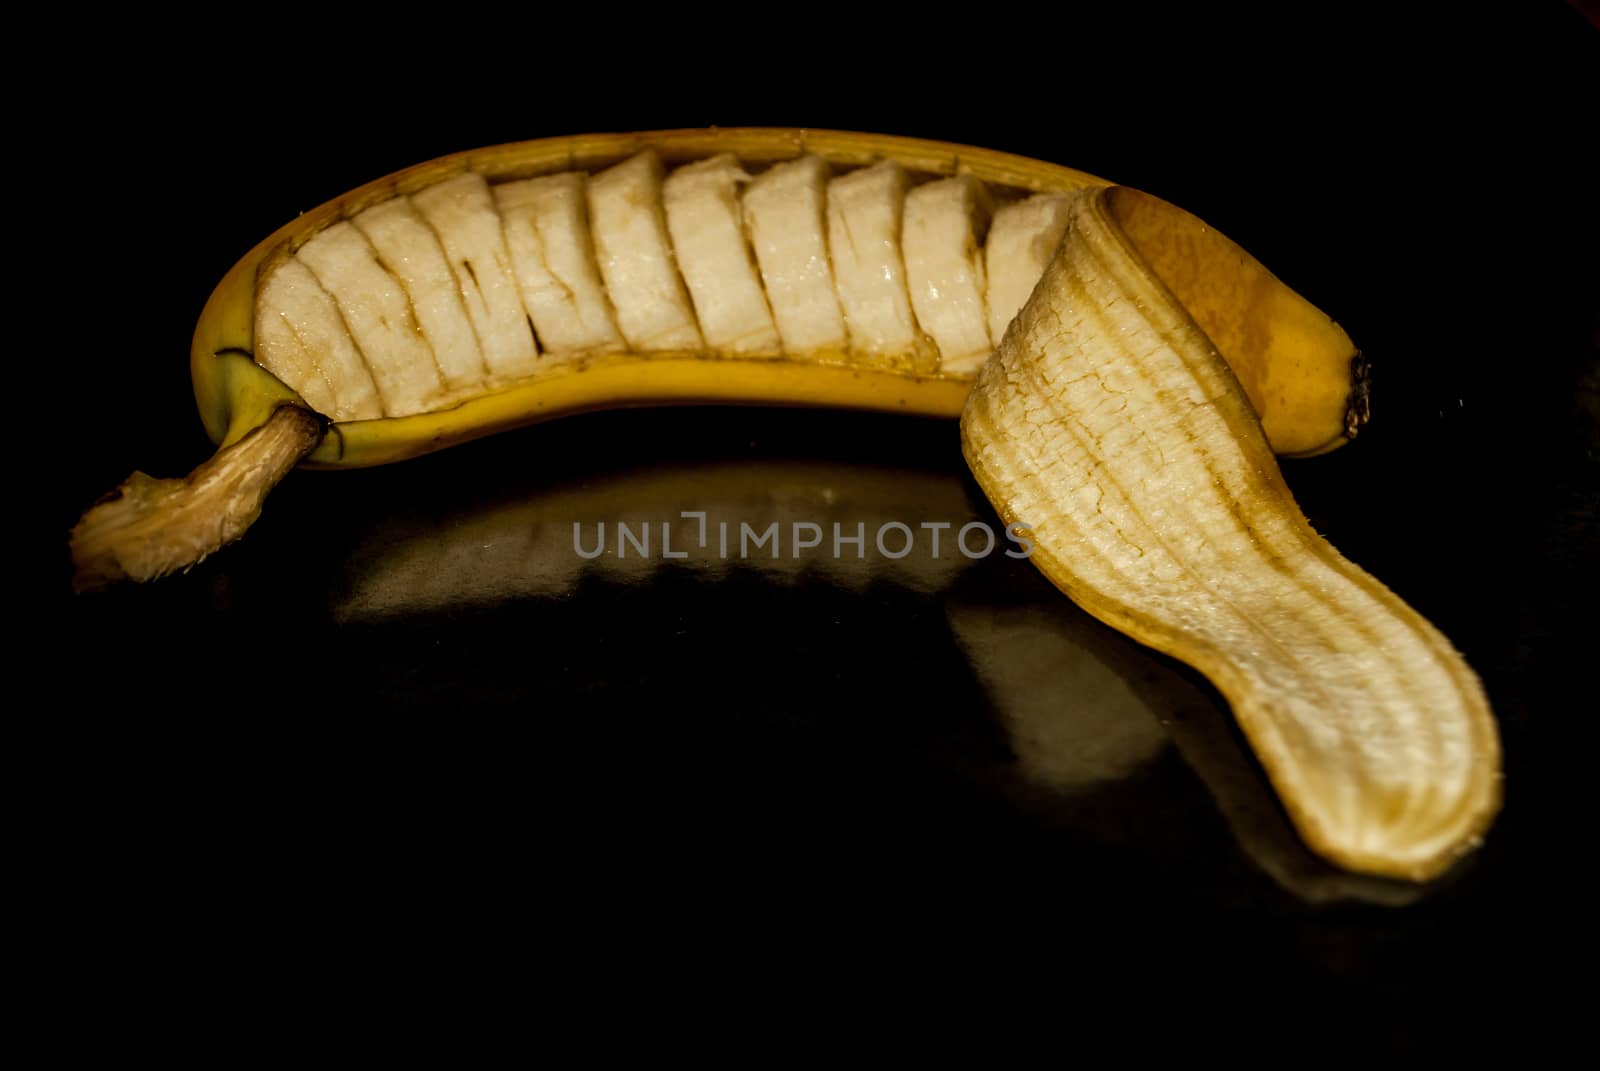 A cut banana still in its peel